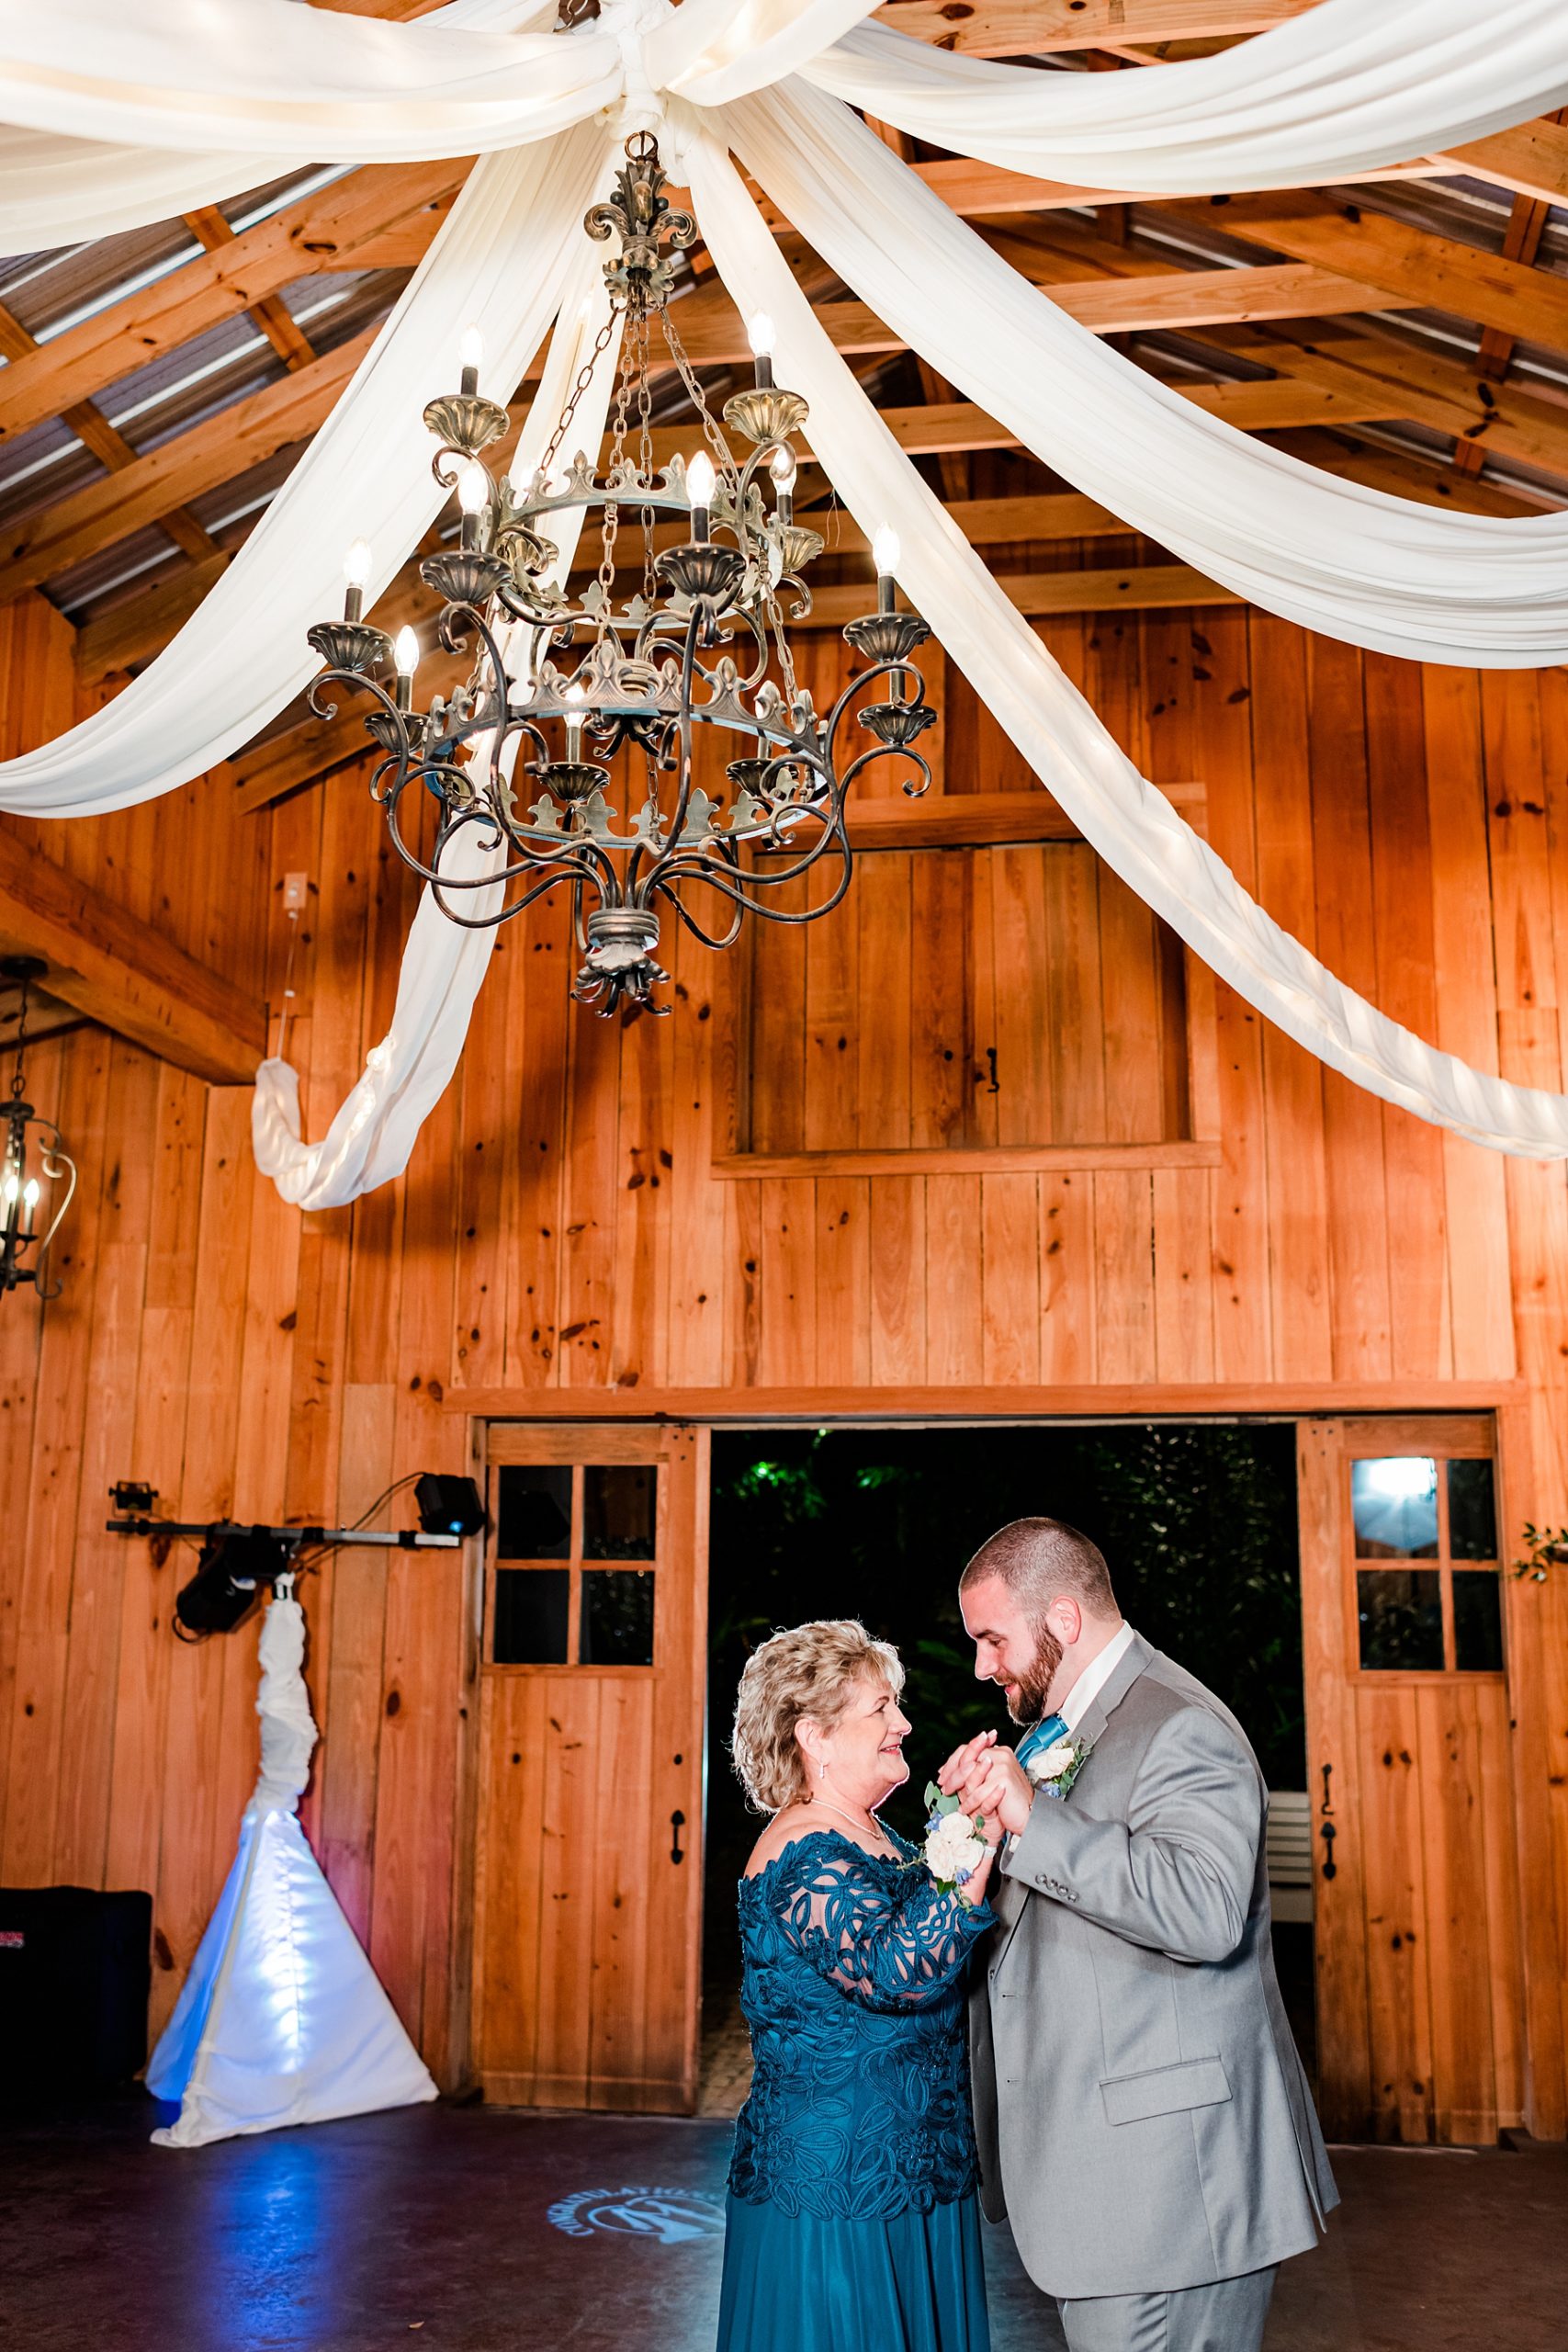 Reception Photos | The Delamater House Wedding | Chynna Pacheco Photography-920